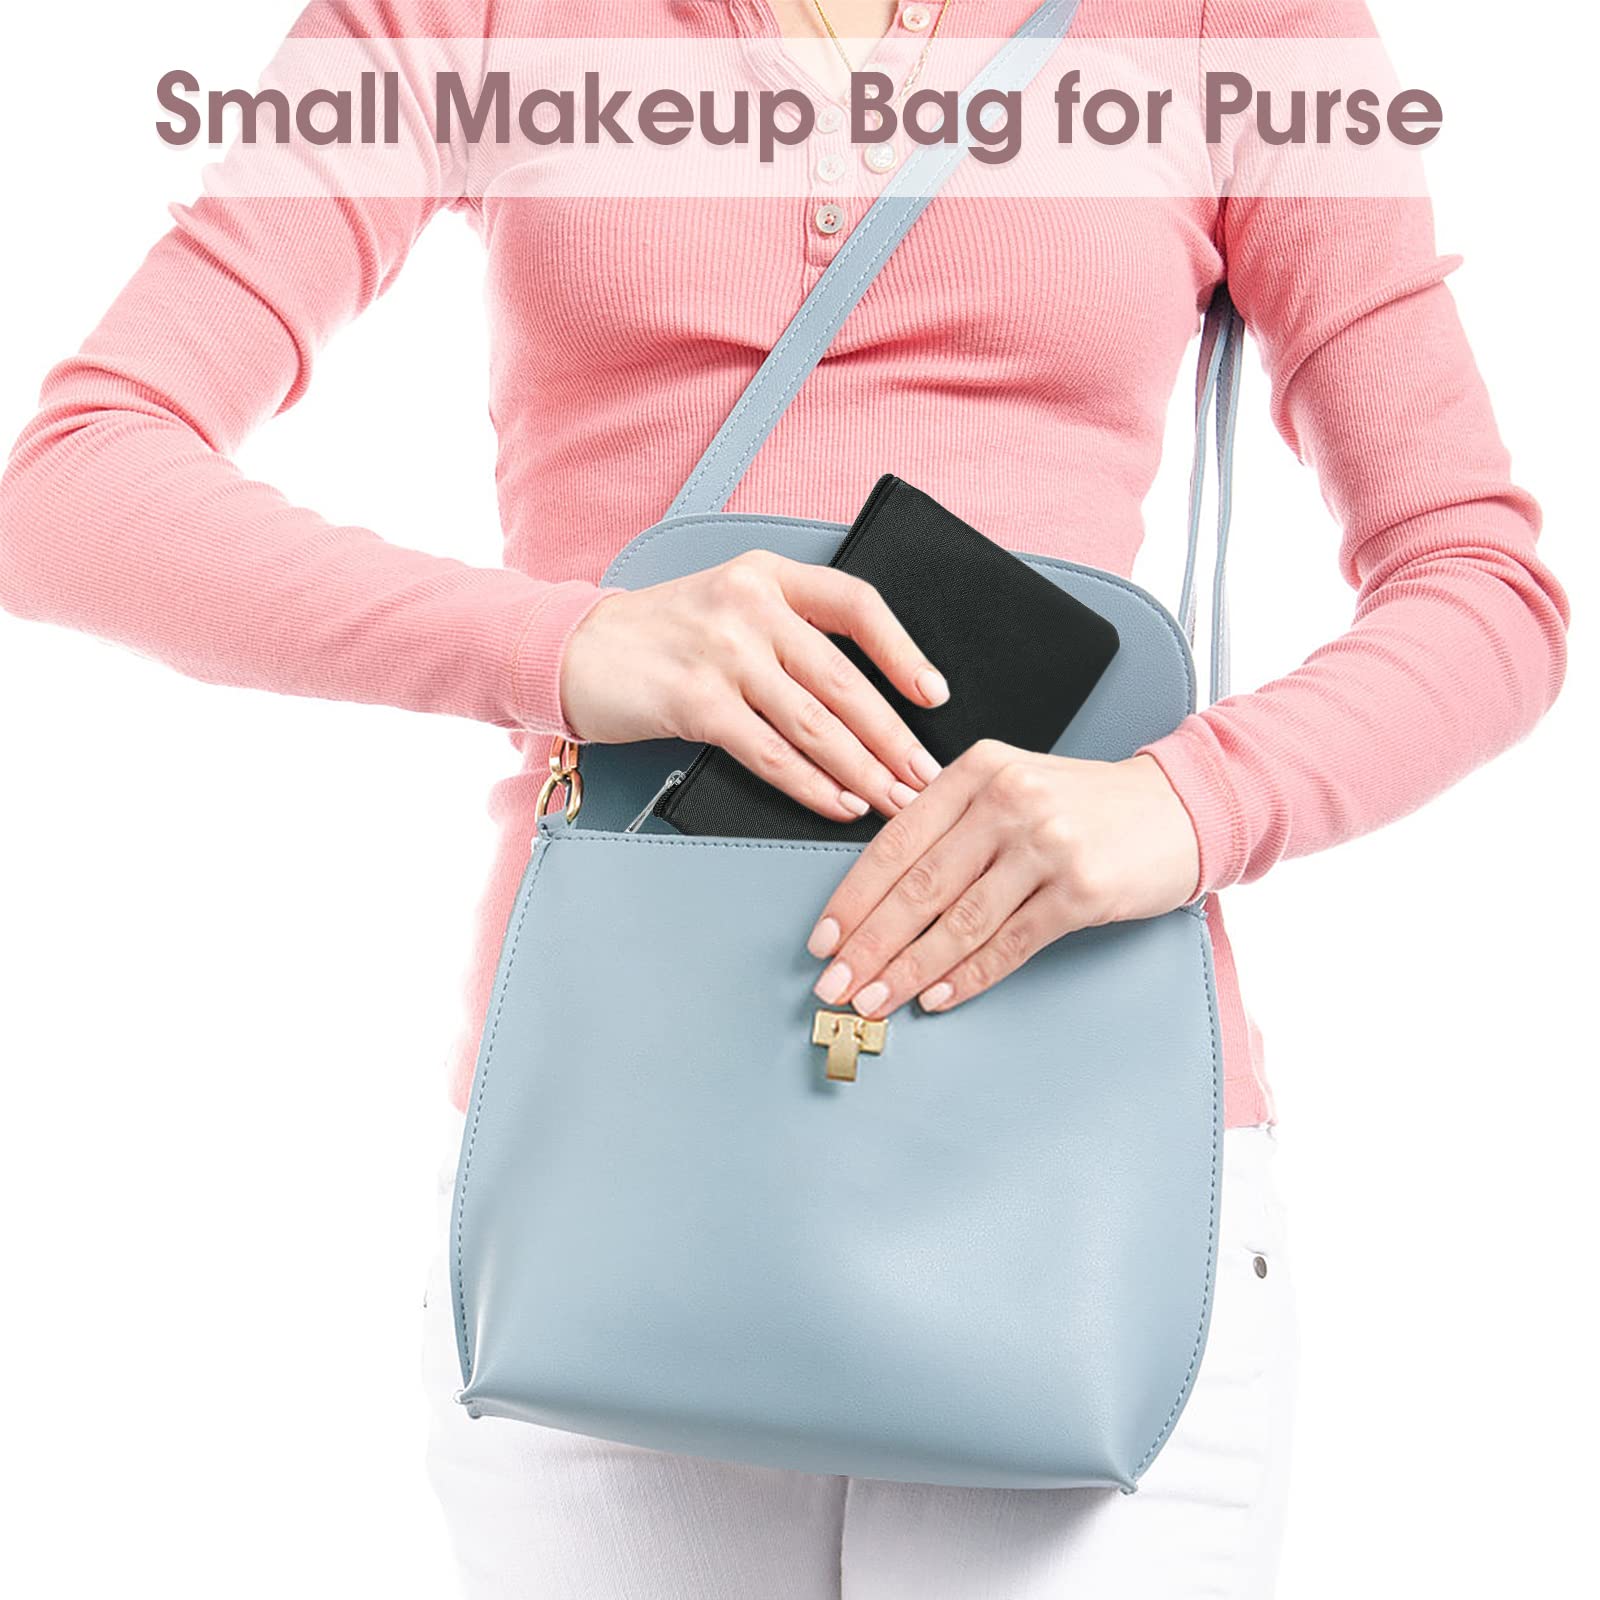 Women's Cosmetic Bags Accessories | Next Ireland